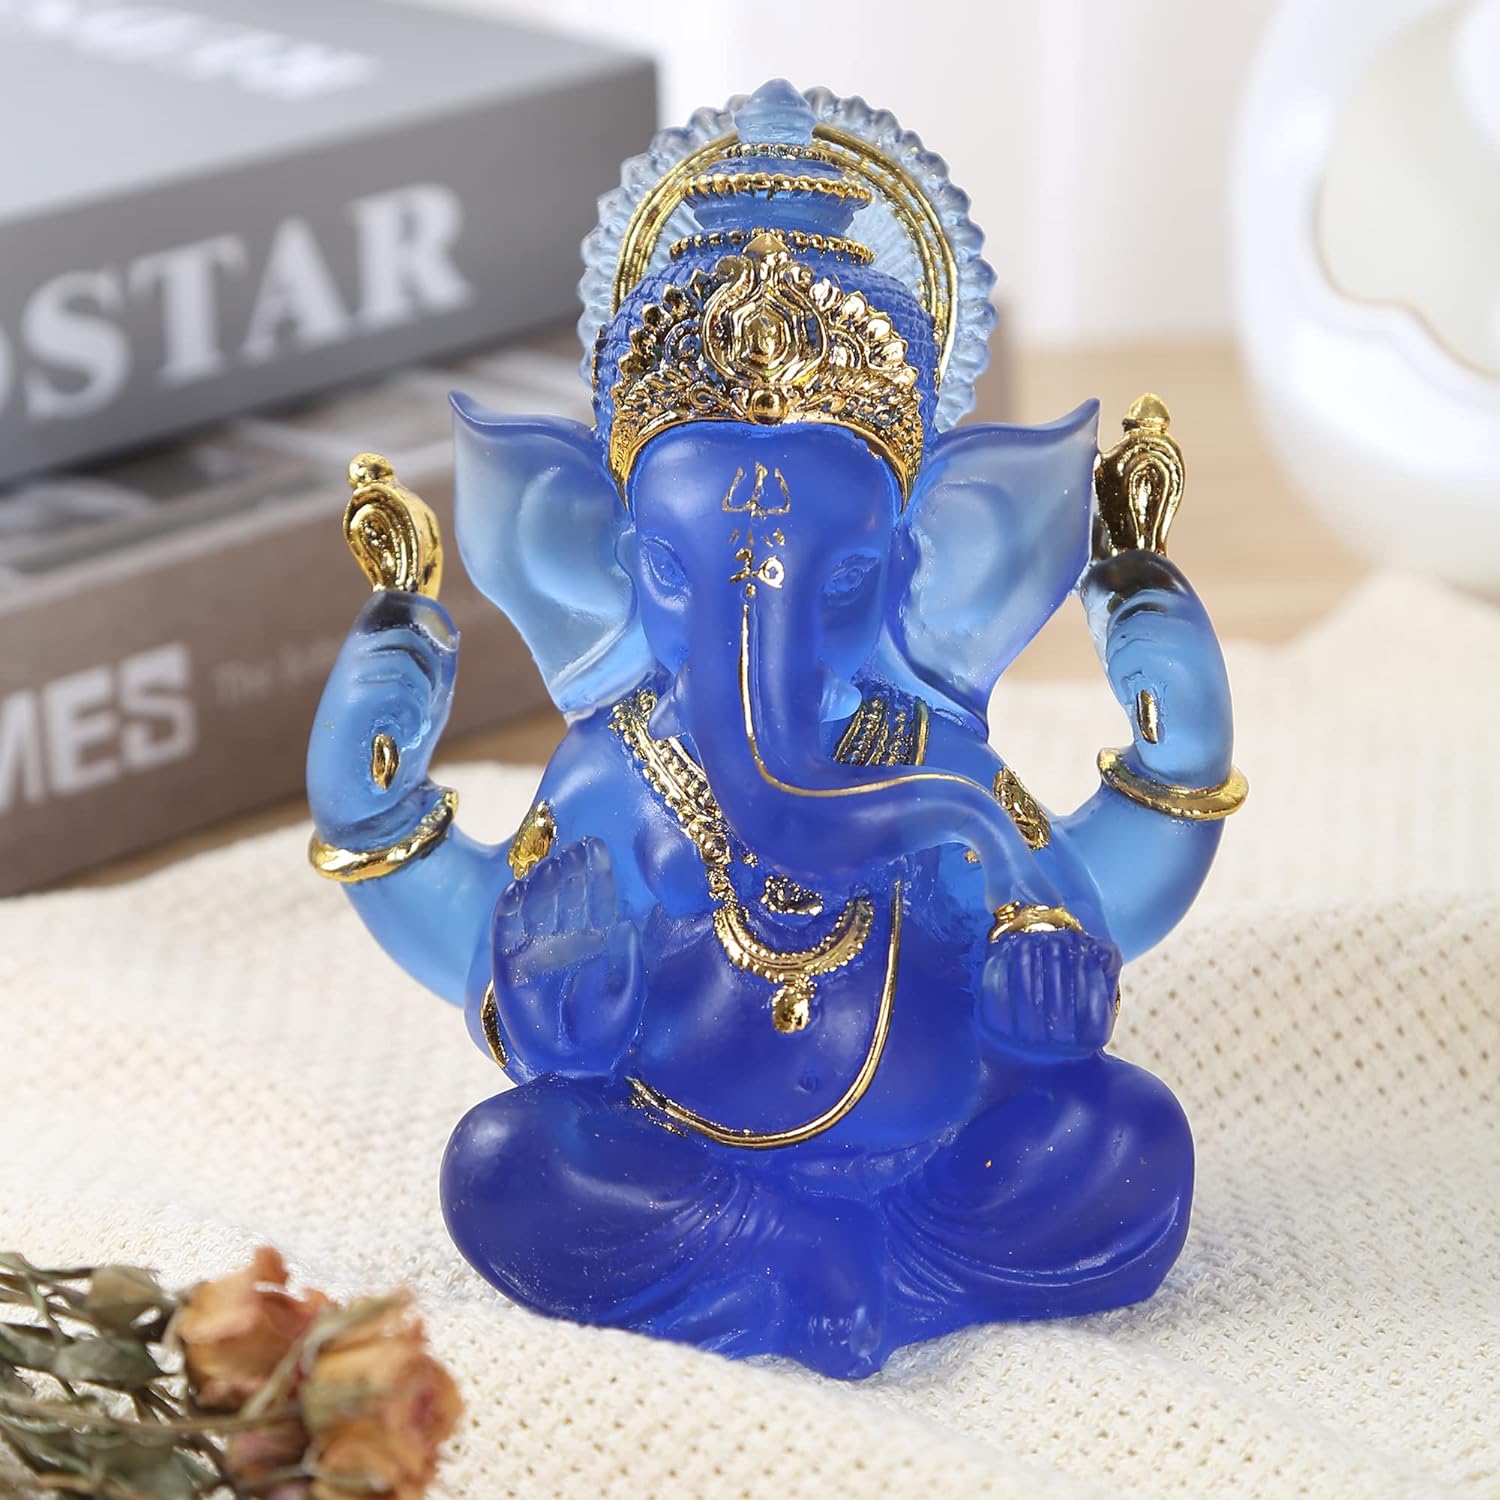 HW 5.6H Blessing A Blue Resin Statue of Lord Ganesha Ganpati Elephant Hindu God, Elephant God Statue, Lmitation Glass Sculpture Buddha Figurine Decoration